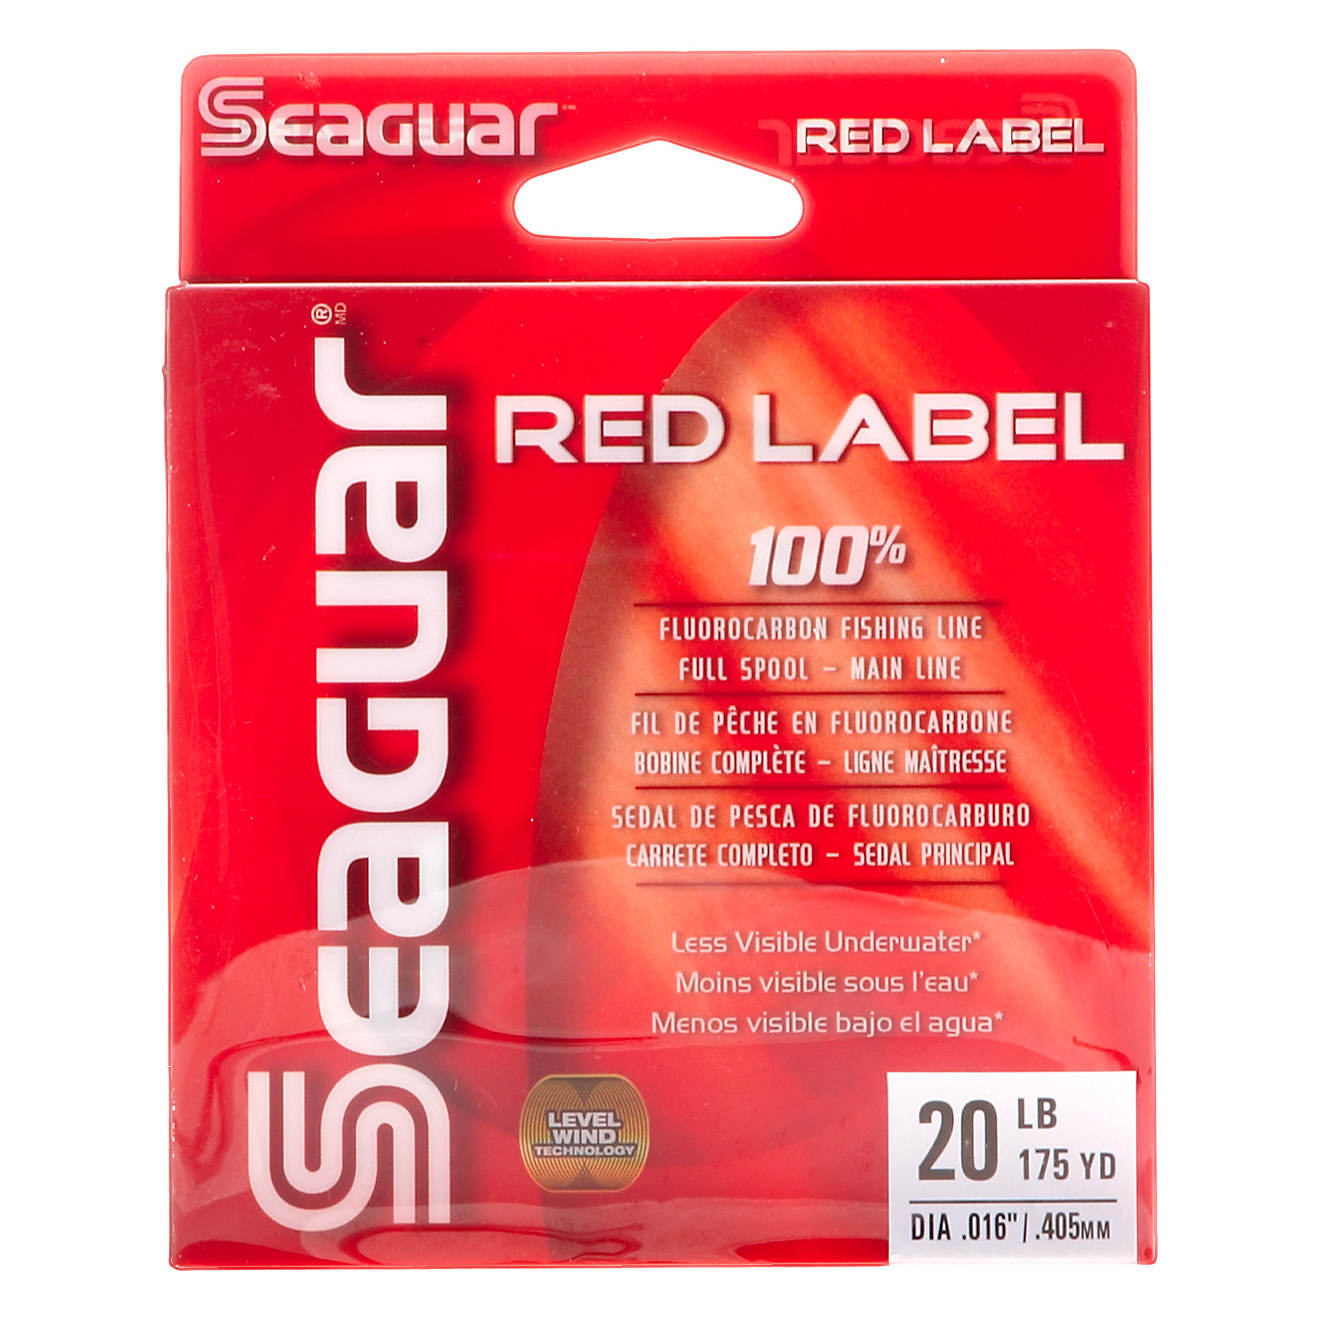 Seaguar® Red Label 20 lb. - 175 yards Fluorocarbon Fishing Line